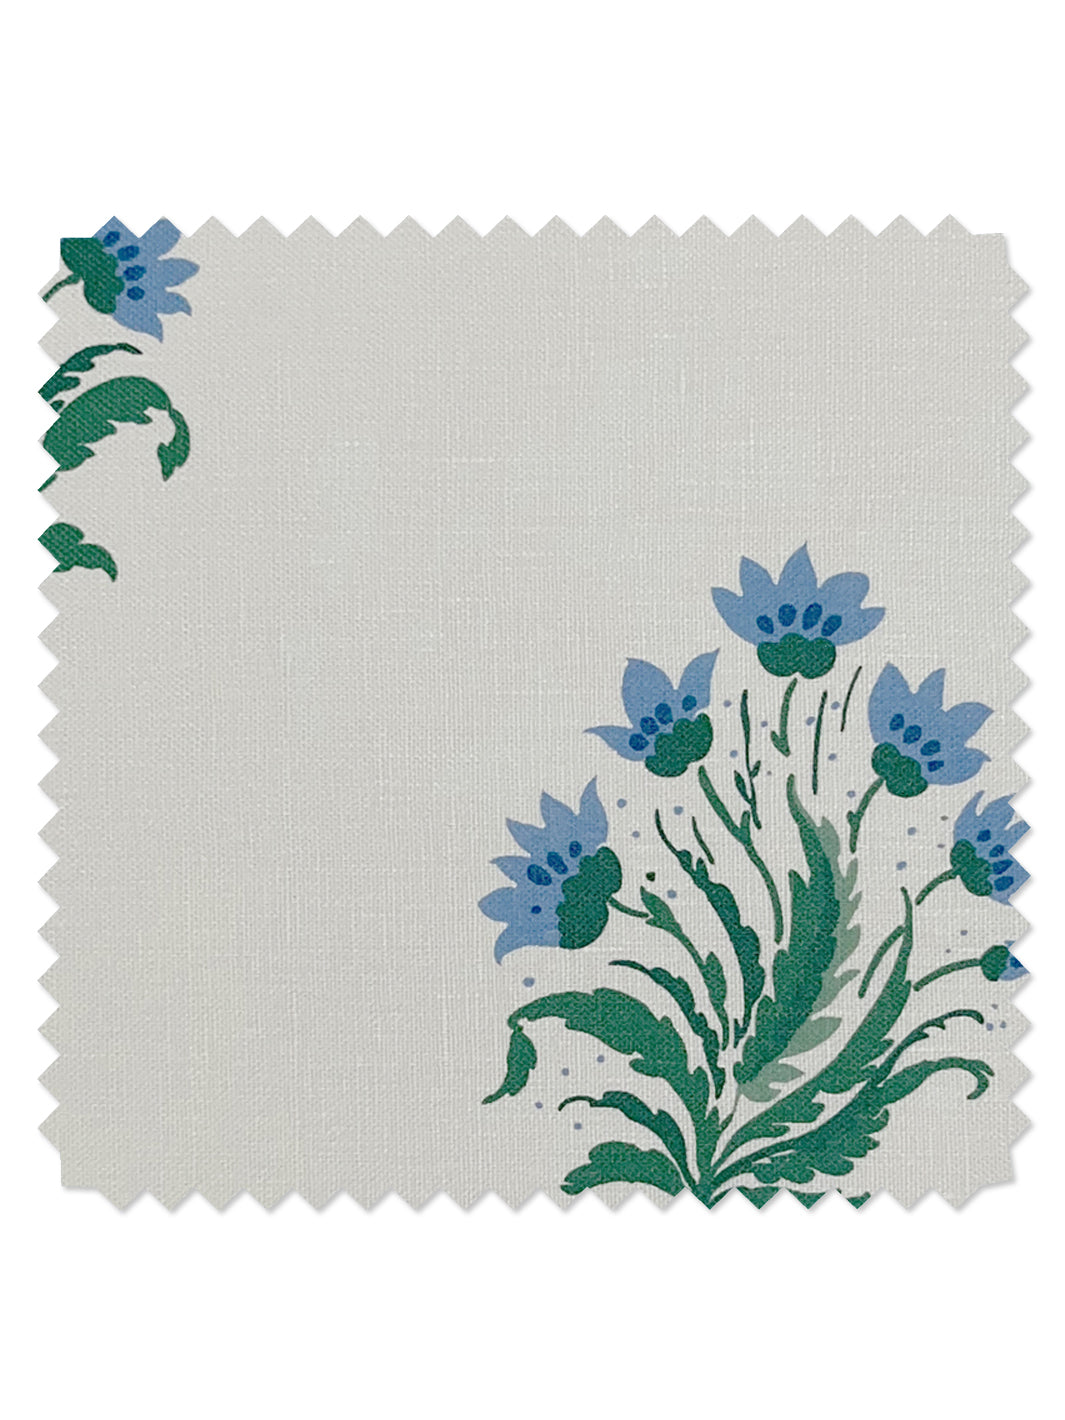 'Hillhouse Block Print' Linen Fabric by Nathan Turner - Blue Green